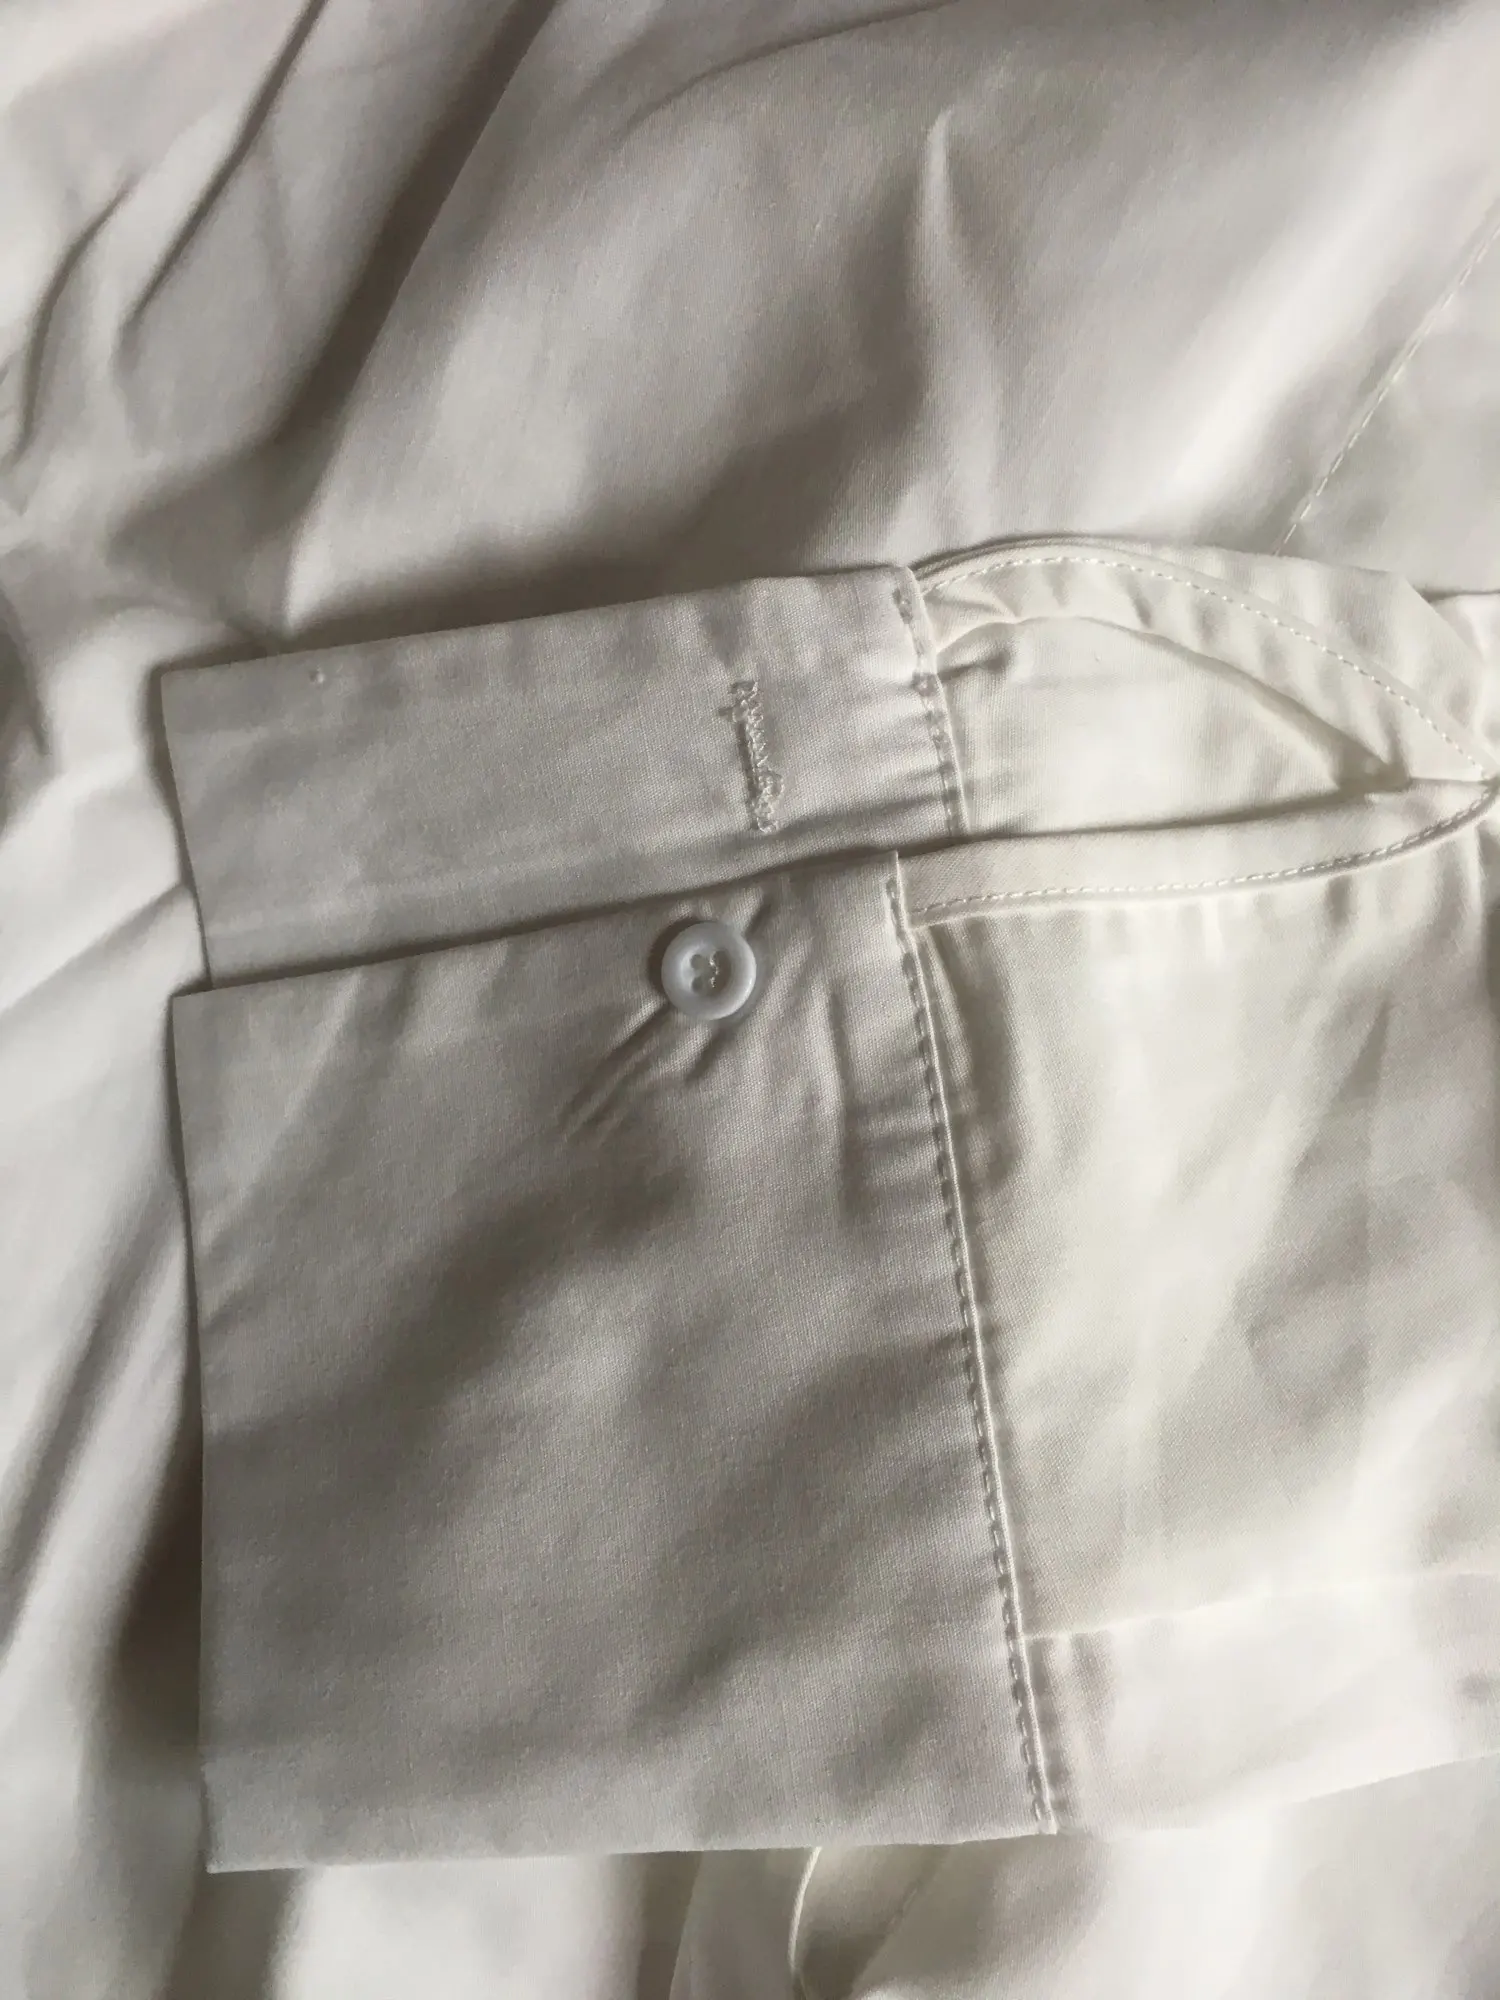 Celmia Fashion Women White Shirt 2021 Autumn Blouses Lapel Casual Solid Long Sleeve Buttons Asymmetric Tunic Top Blusas Oversize photo review